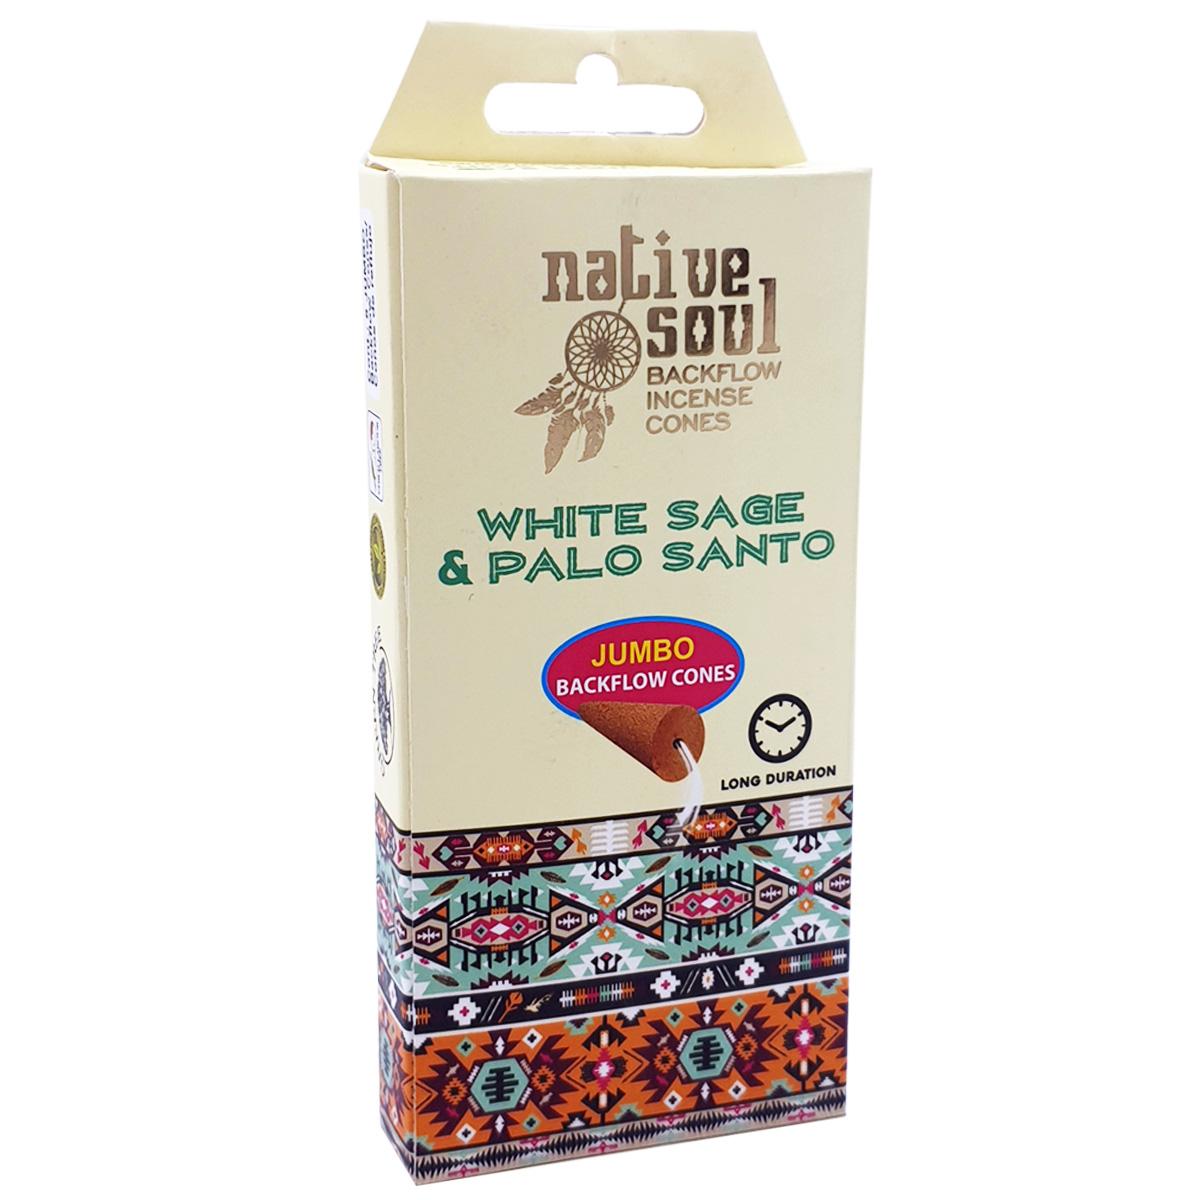 Native Soul White Sage & Palo Santo Backflow Cones (Jumbo)